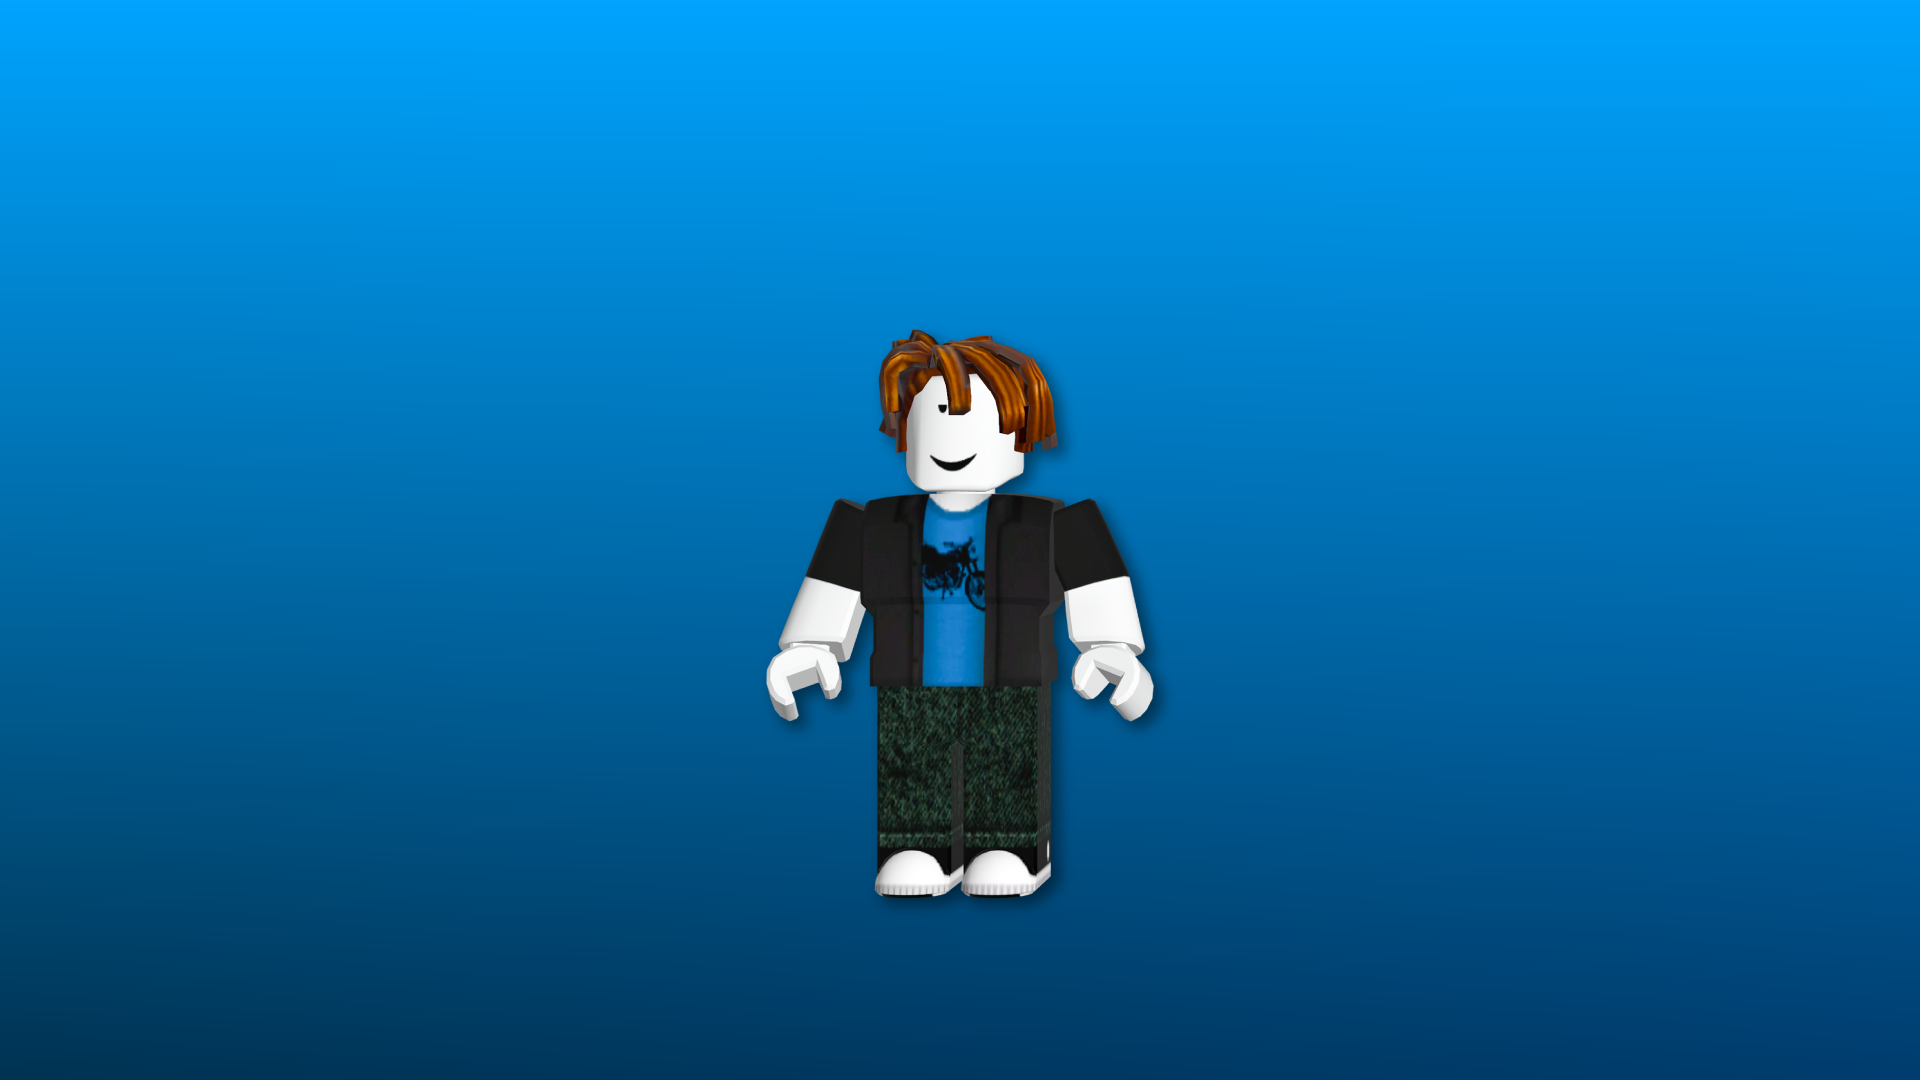 Bacon hair to my roblox avatar transformation